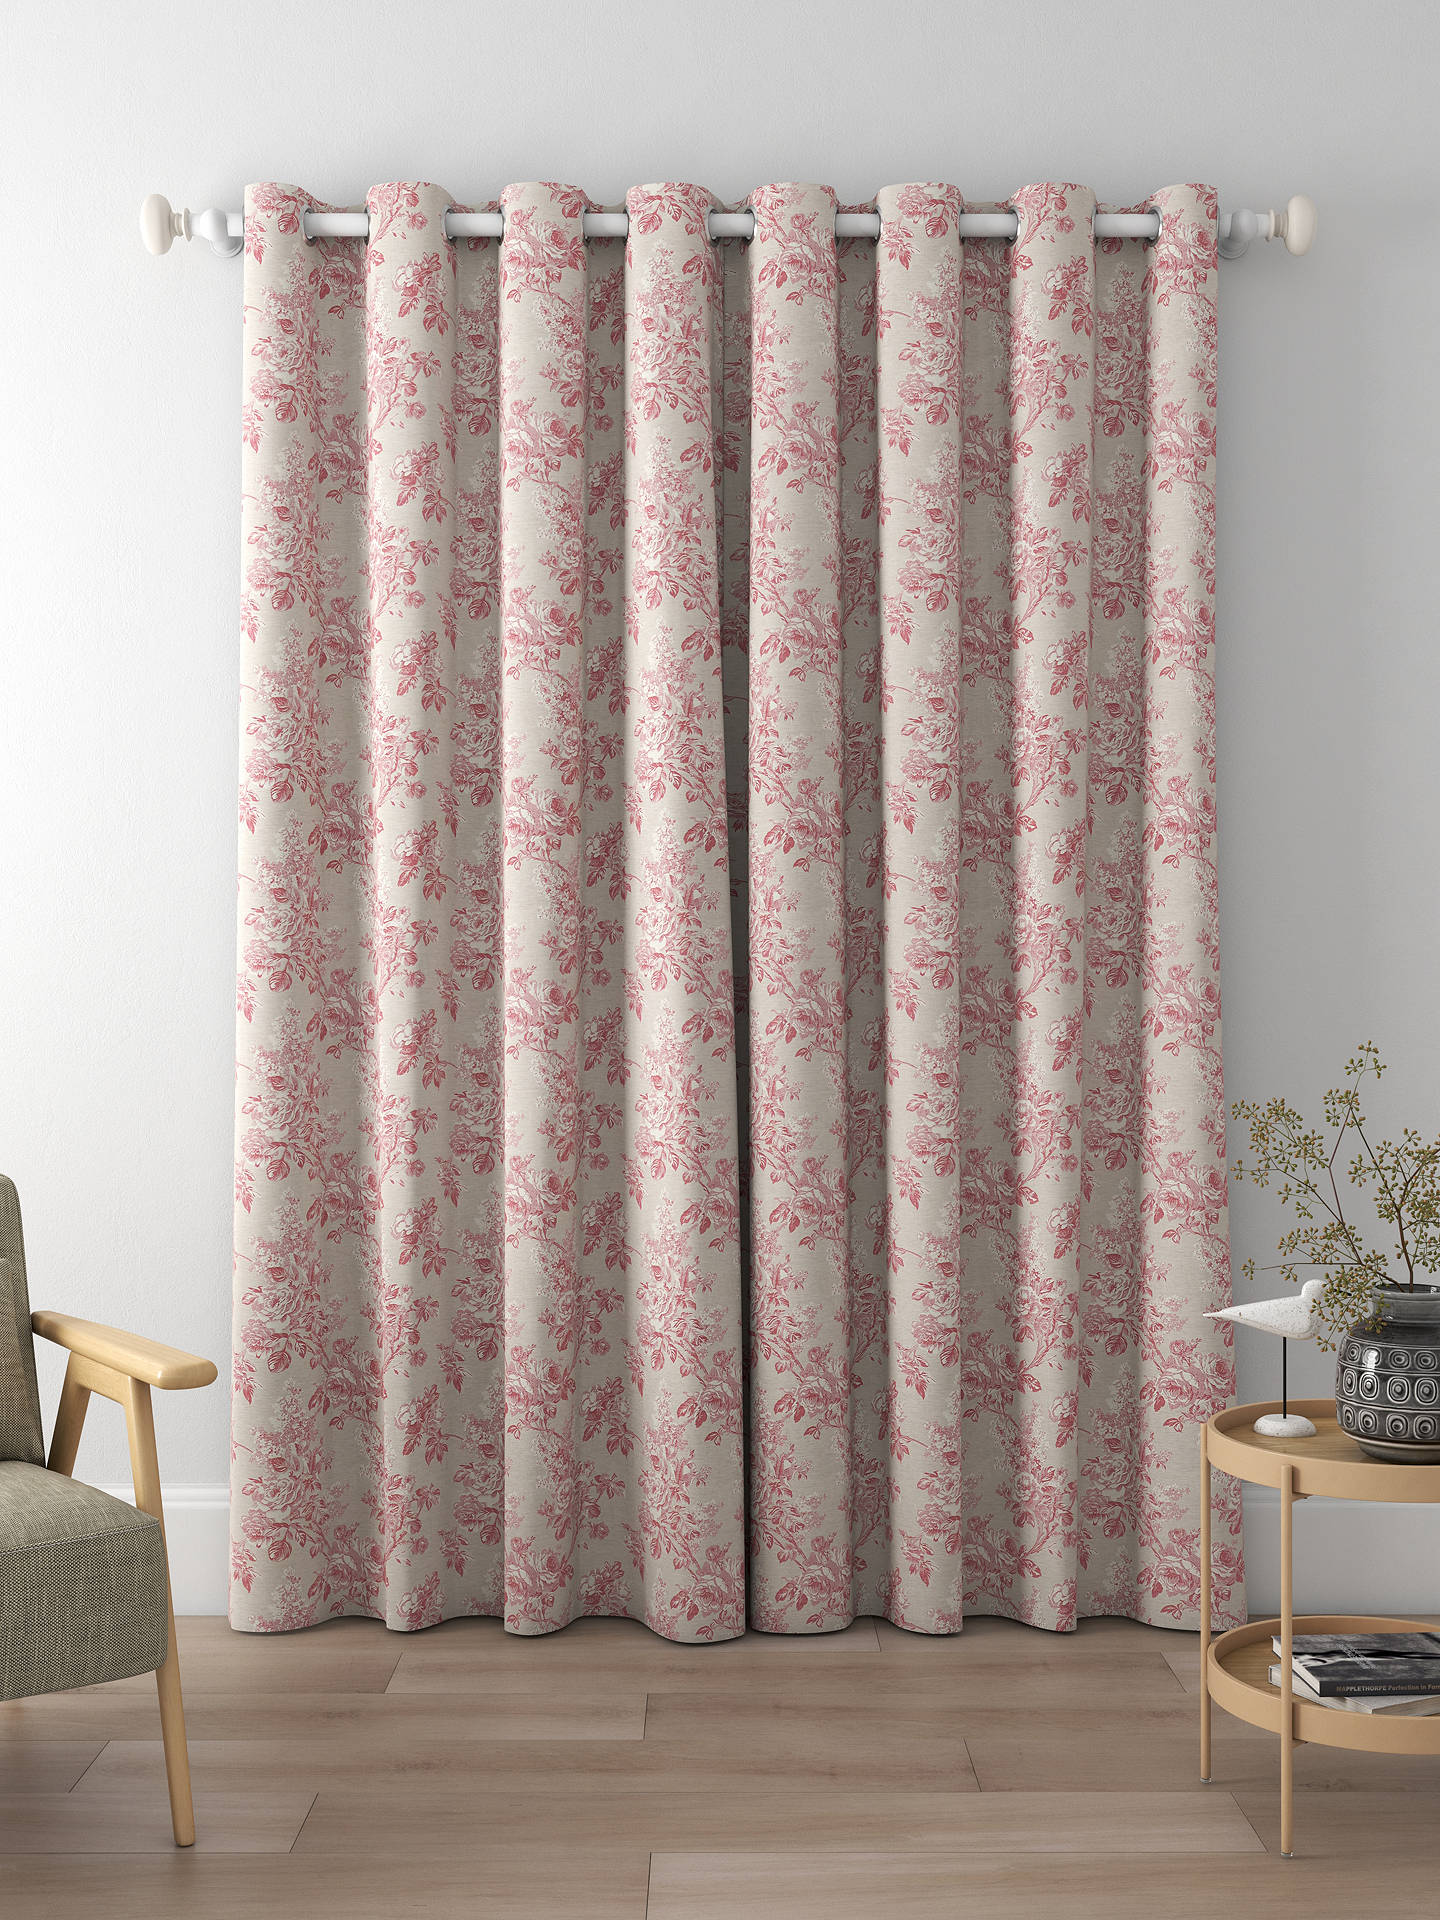 Sanderson Sorilla Damask Made to Measure Curtains, Rose/Linen